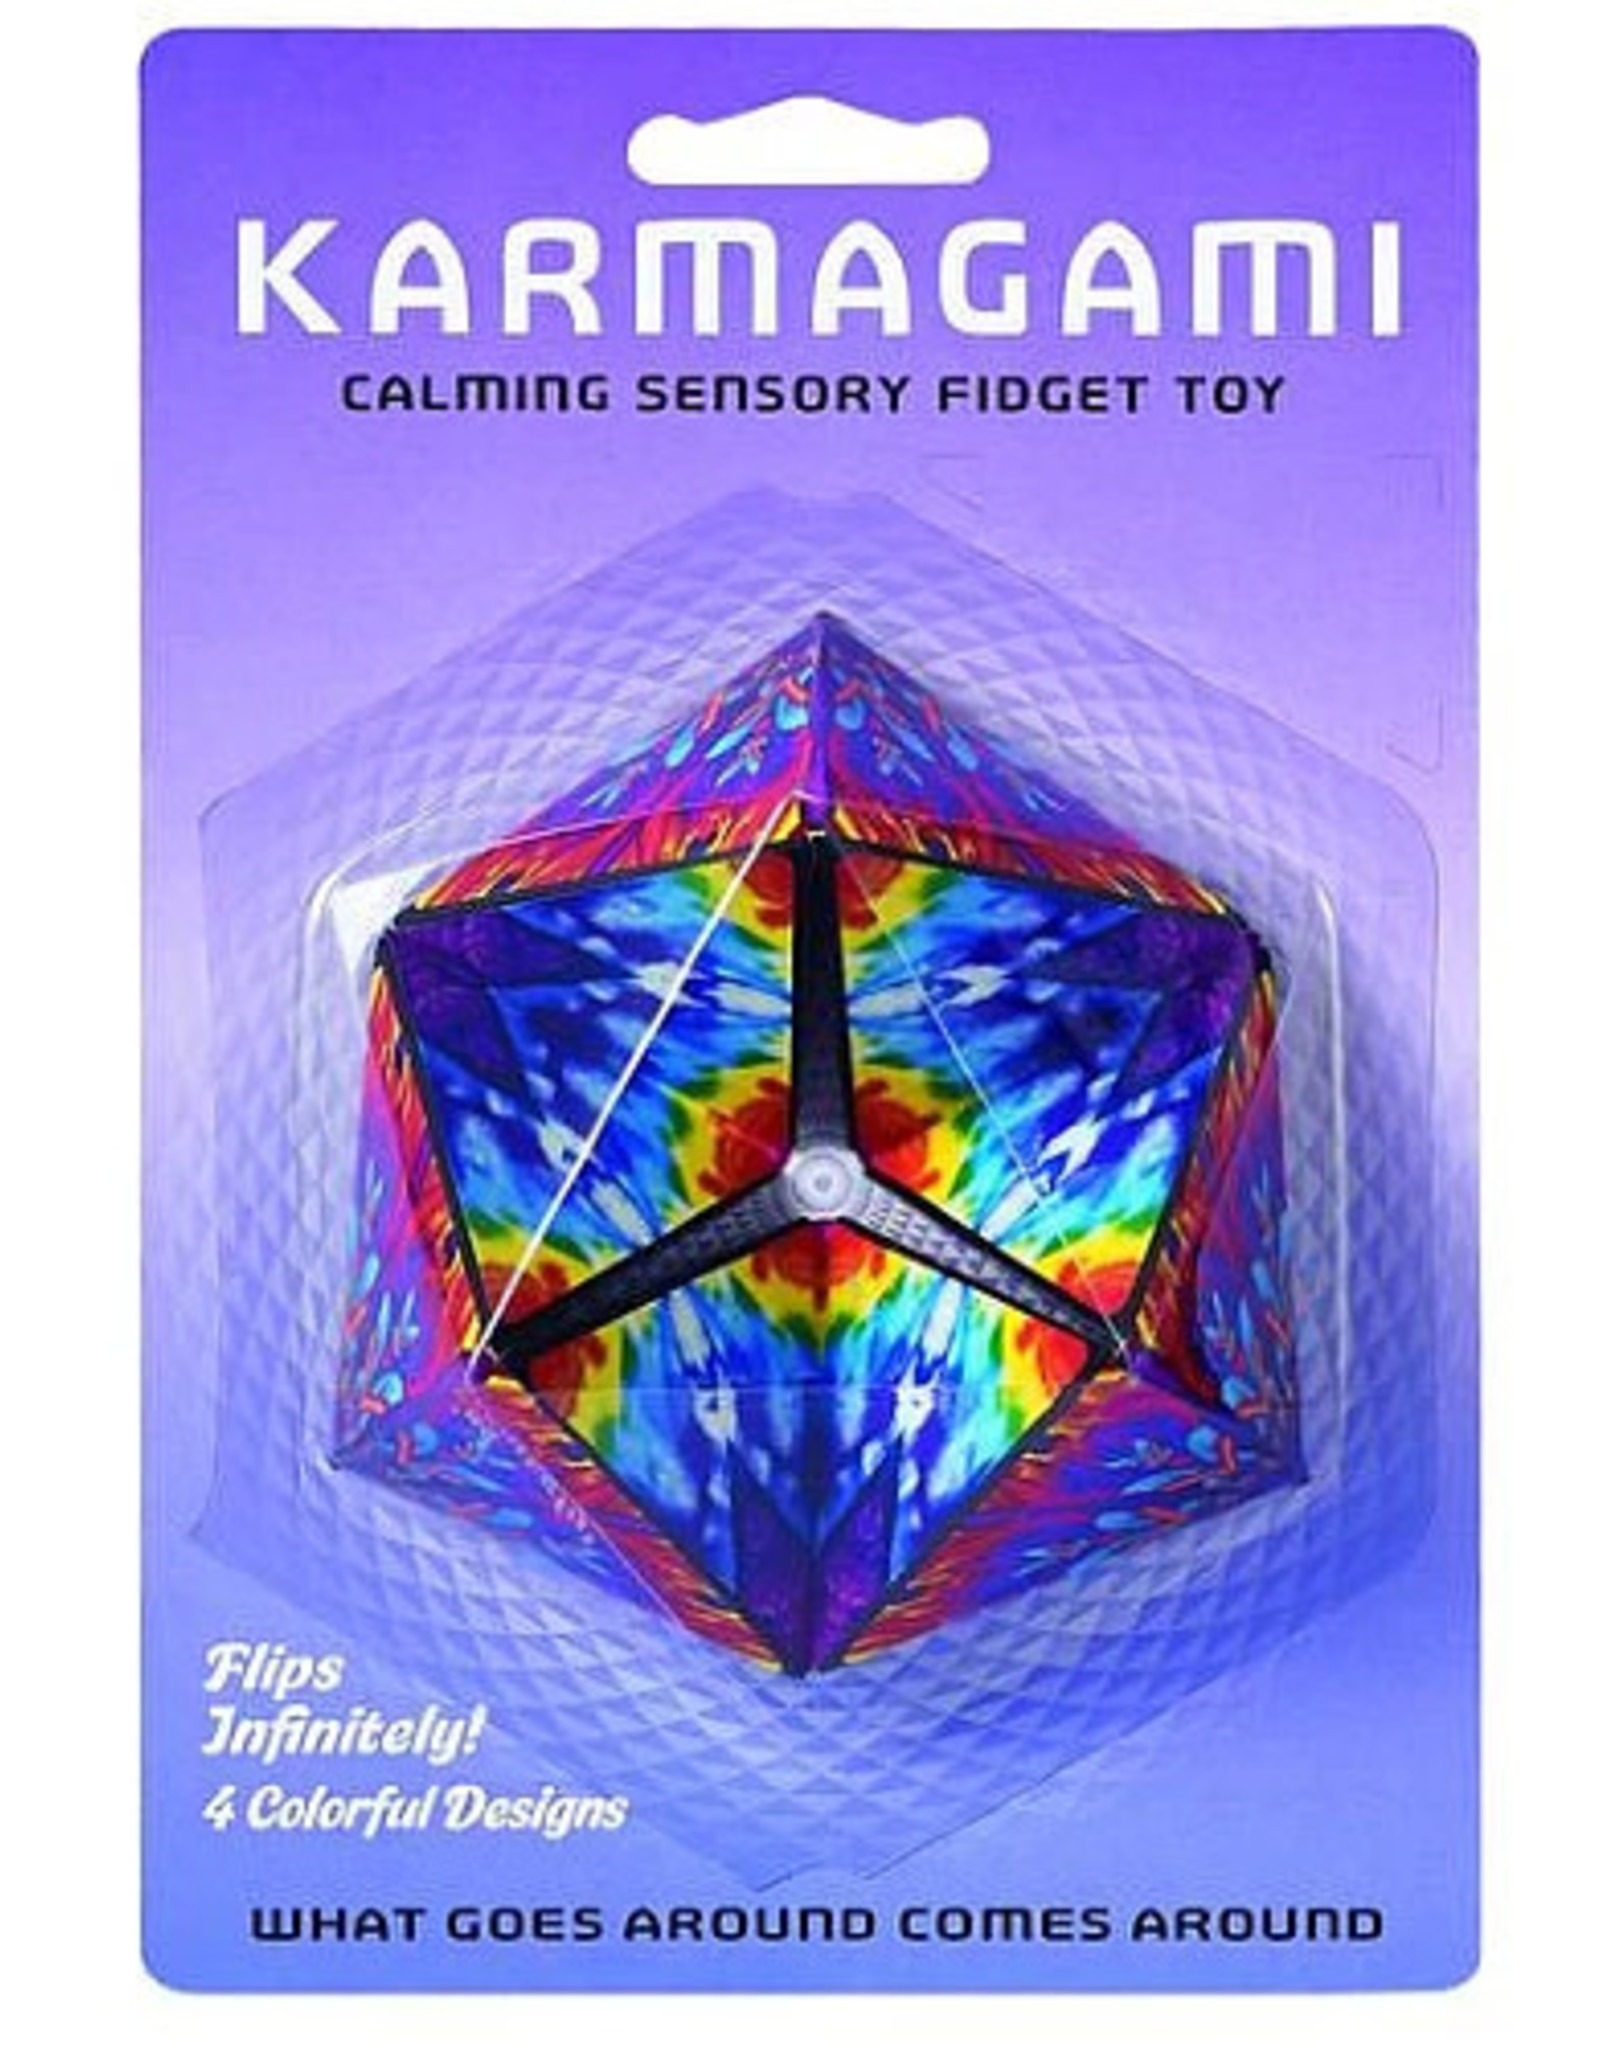 Karmagami